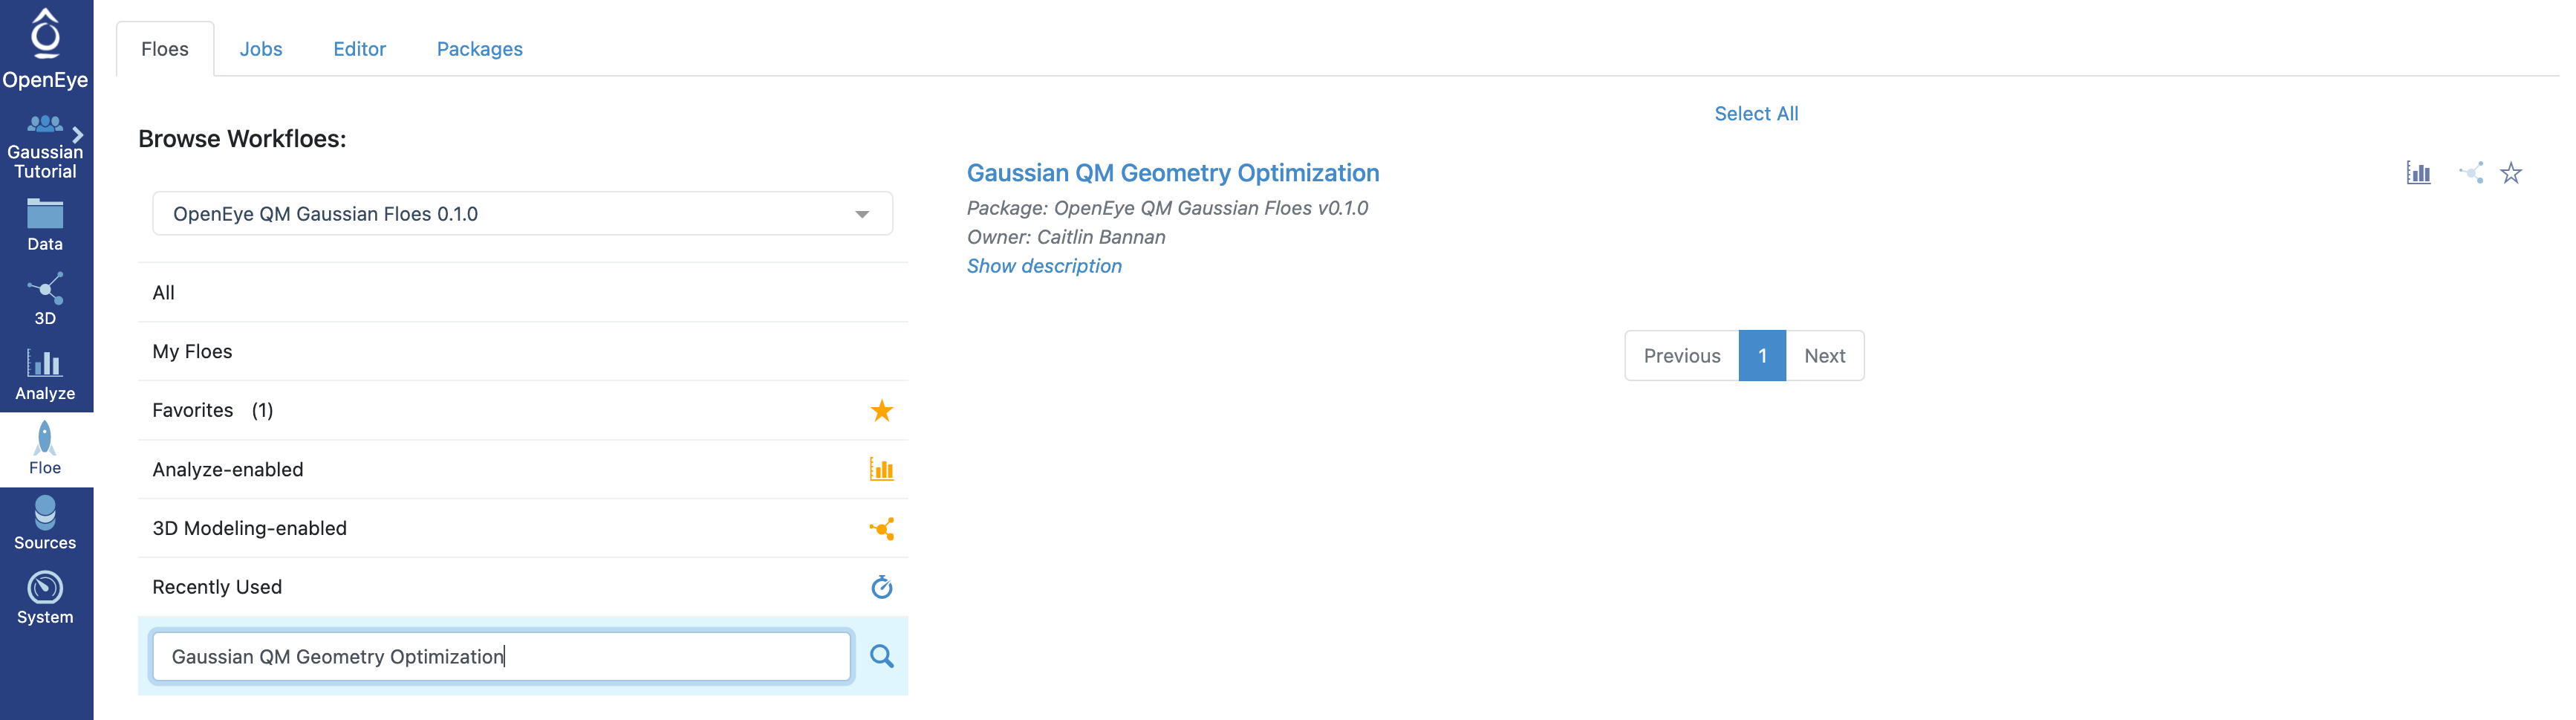 Search for Gaussian QM Geometry Optimization Floe